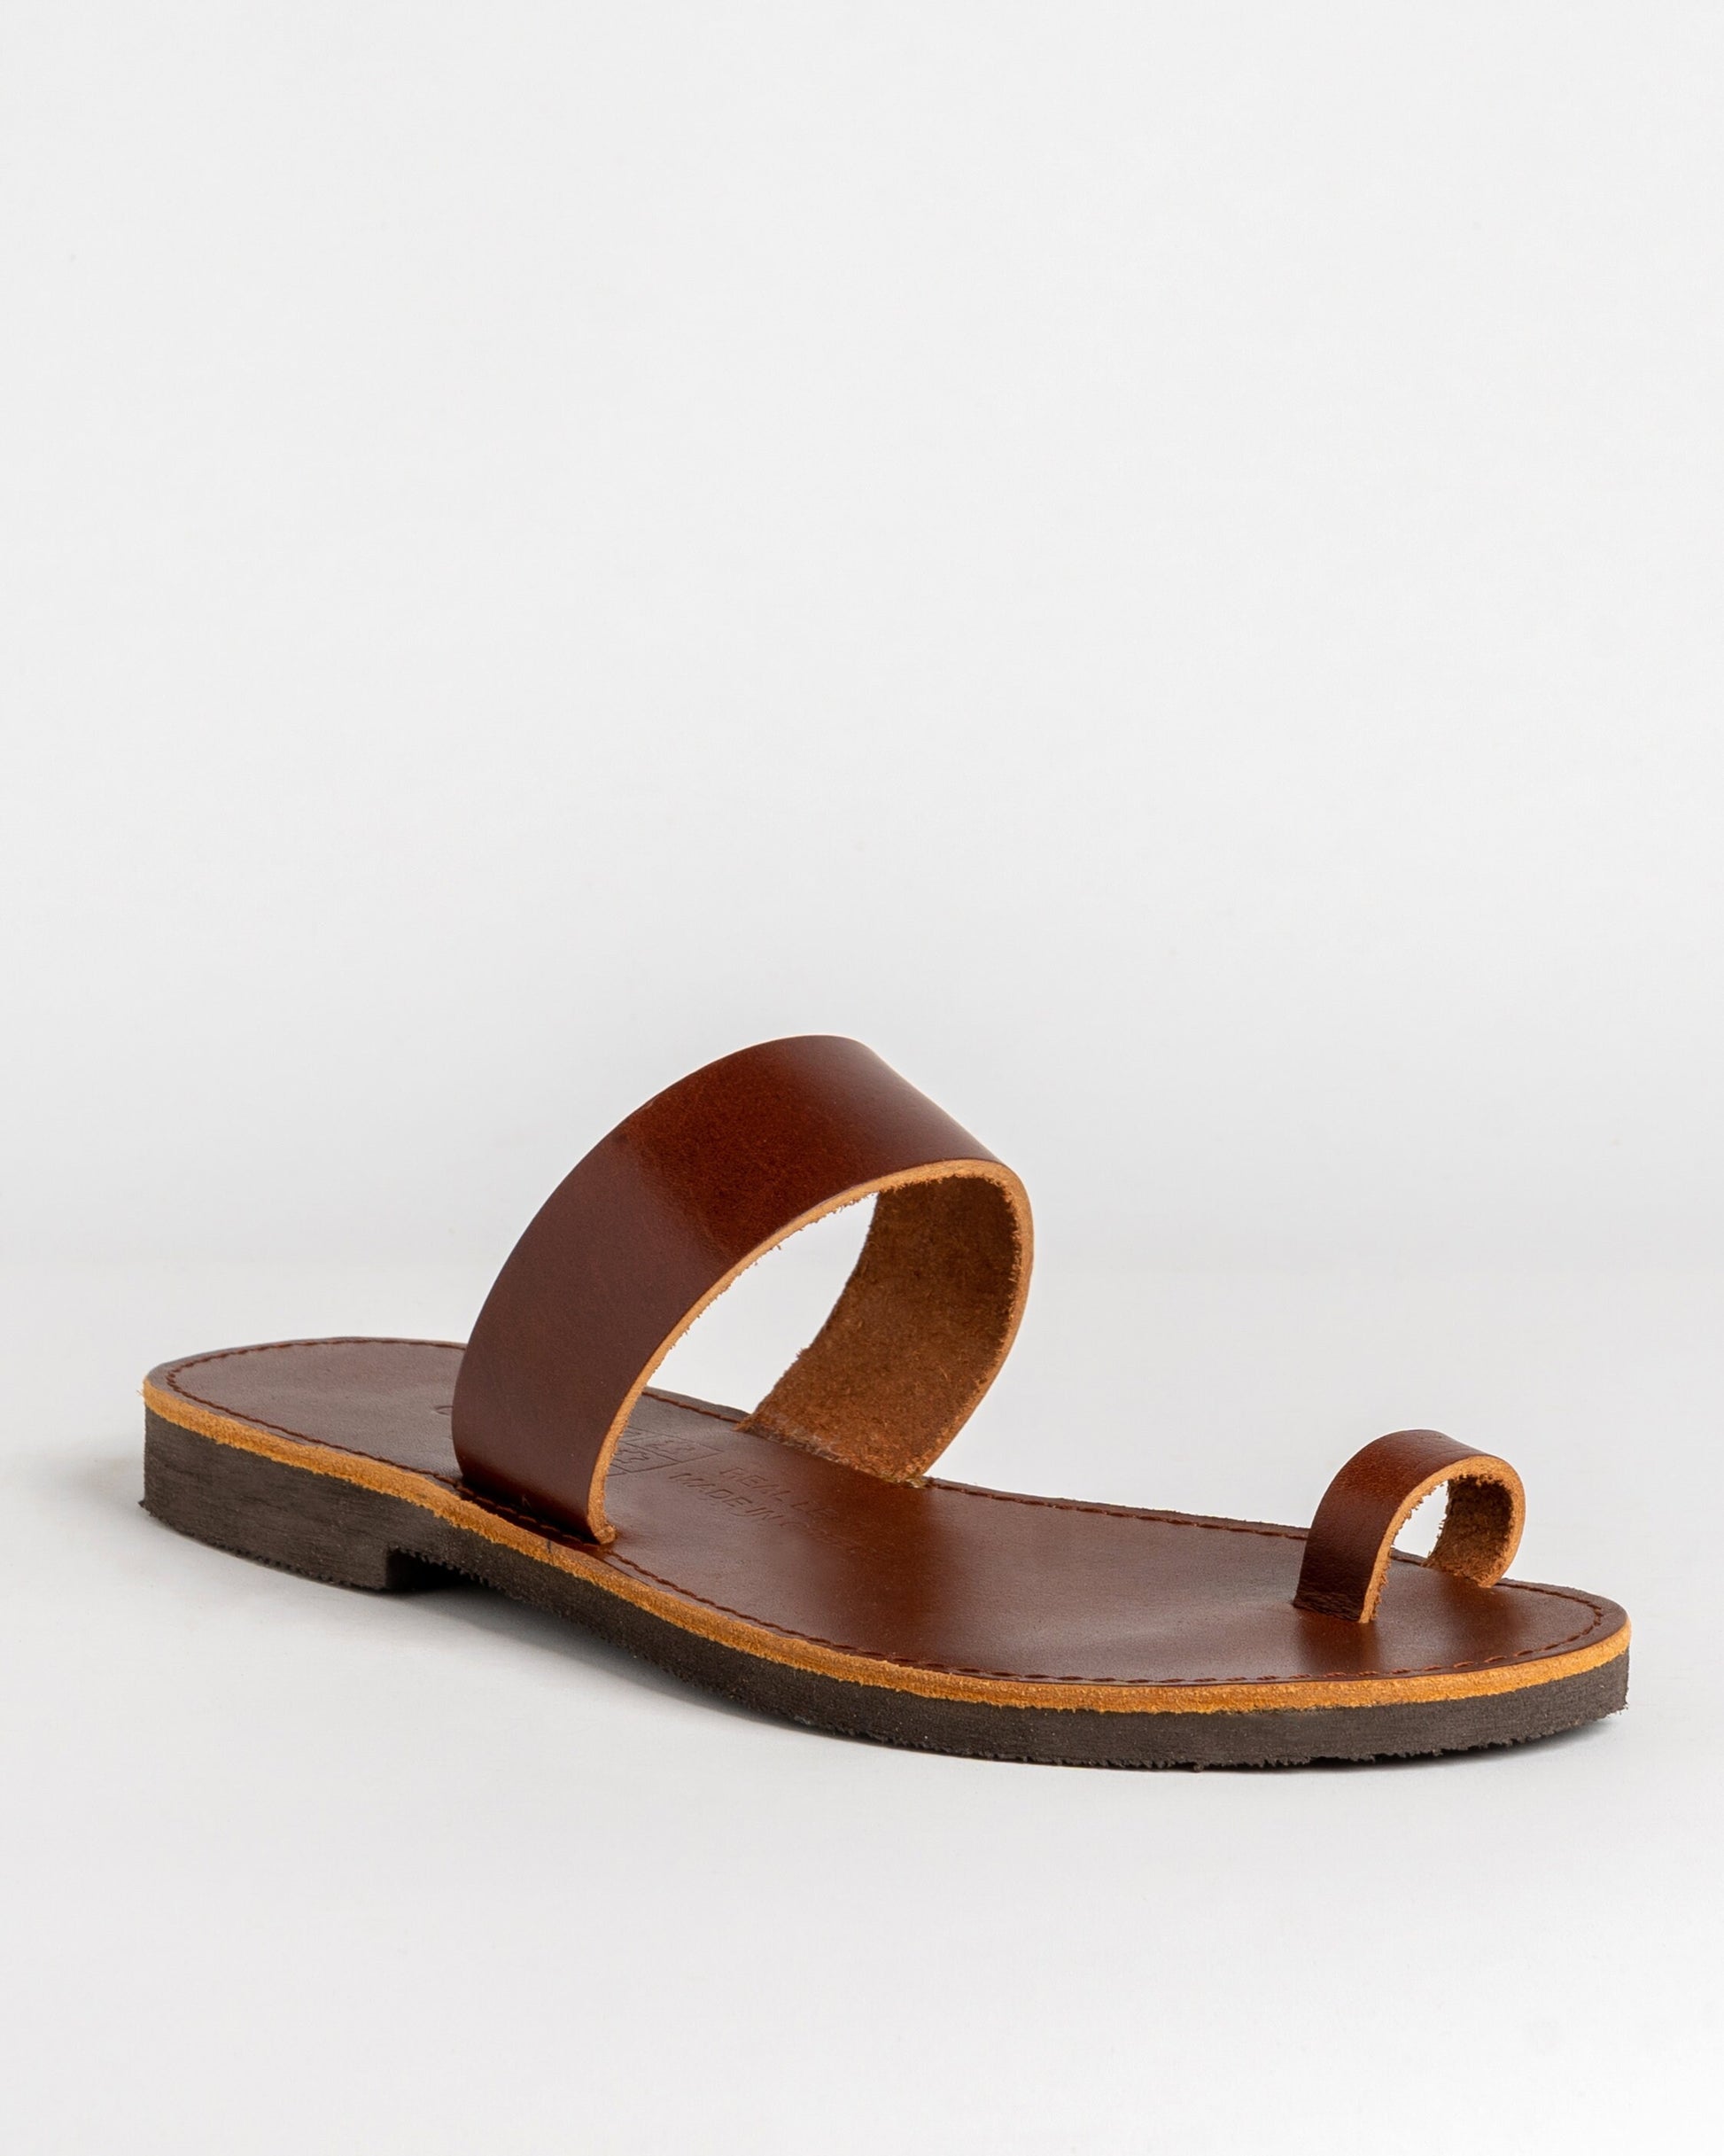 Toe ring leather sandals women, Greek leather sandals flats, Black leather barefoot sandals, Griechische Leder Sandalen